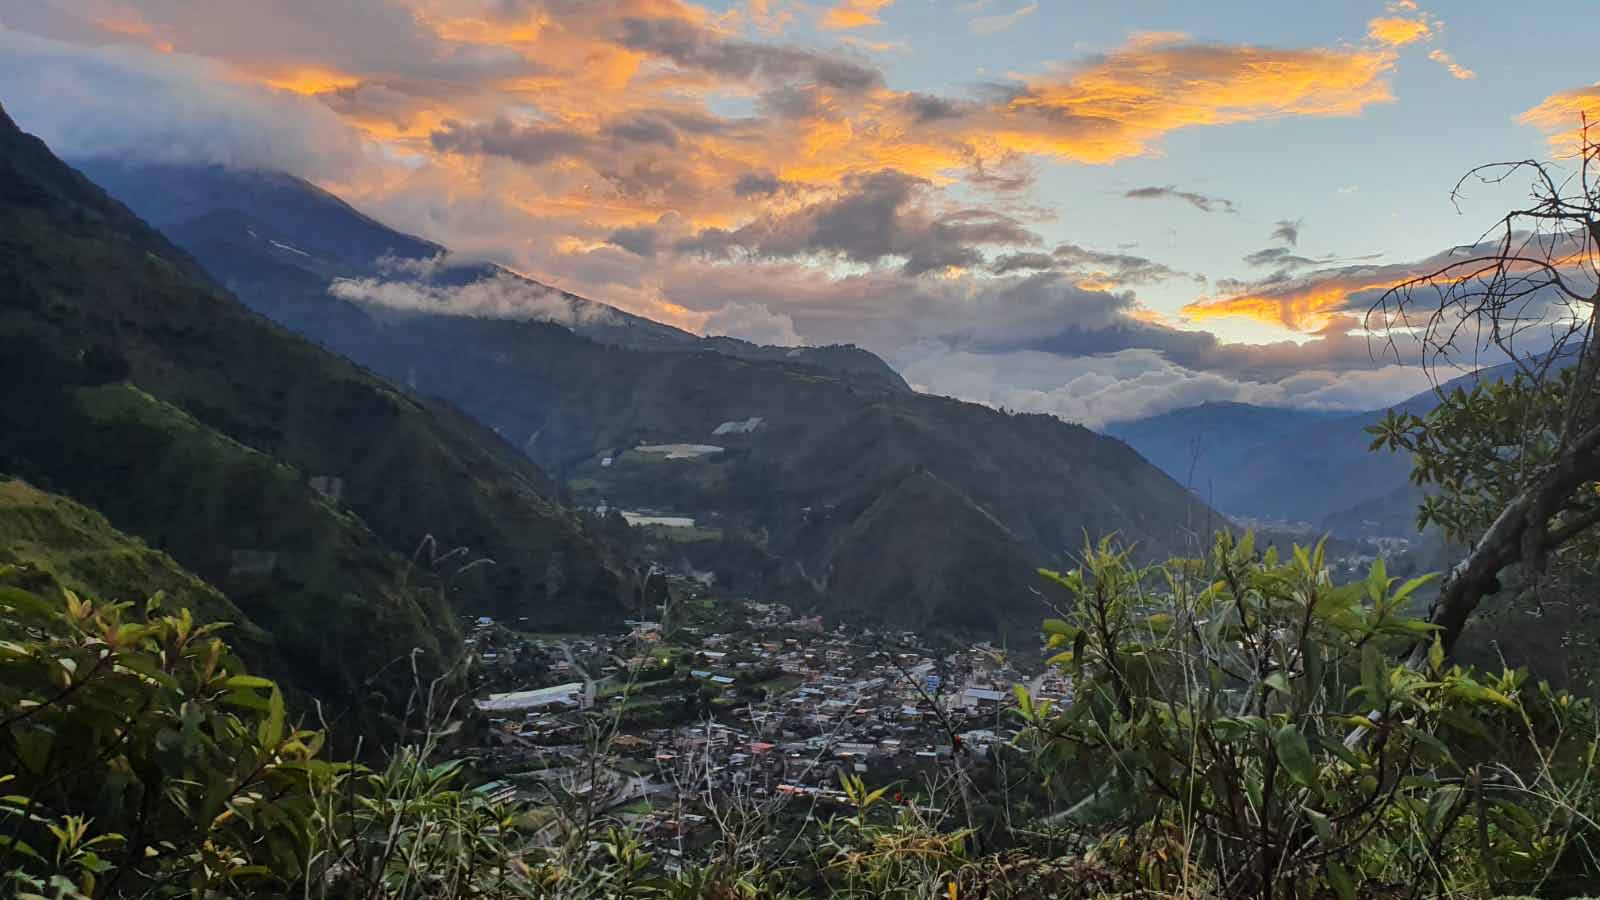 Baños - the adventure capital of Ecuador 